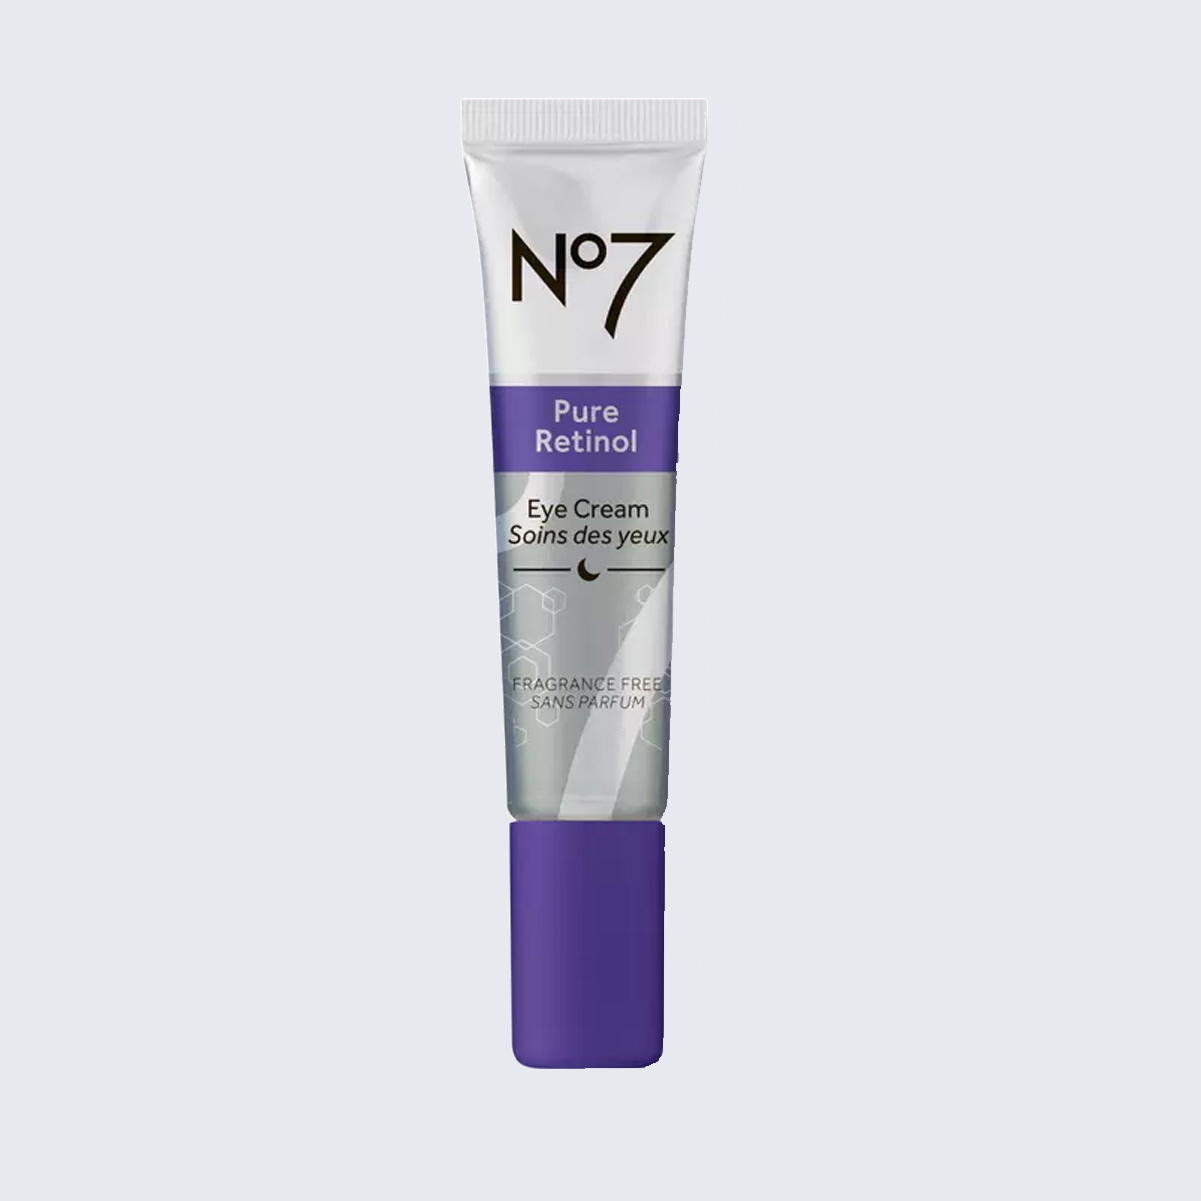 No7 Pure Retinol Eye cream in silver and purple packaging